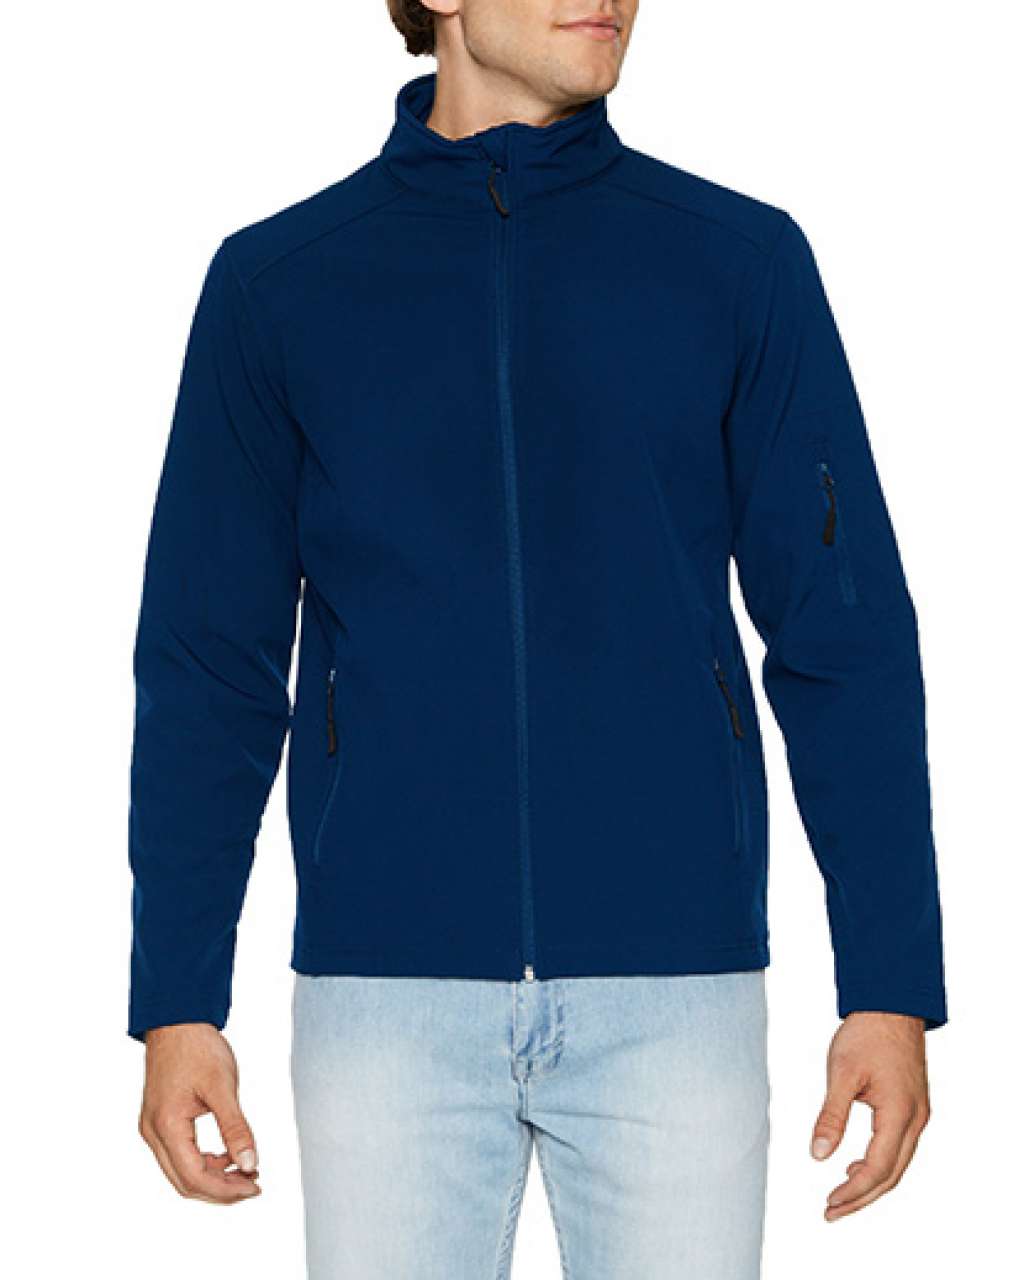 Gildan Hammer Unisex Softshell Jacket - blau